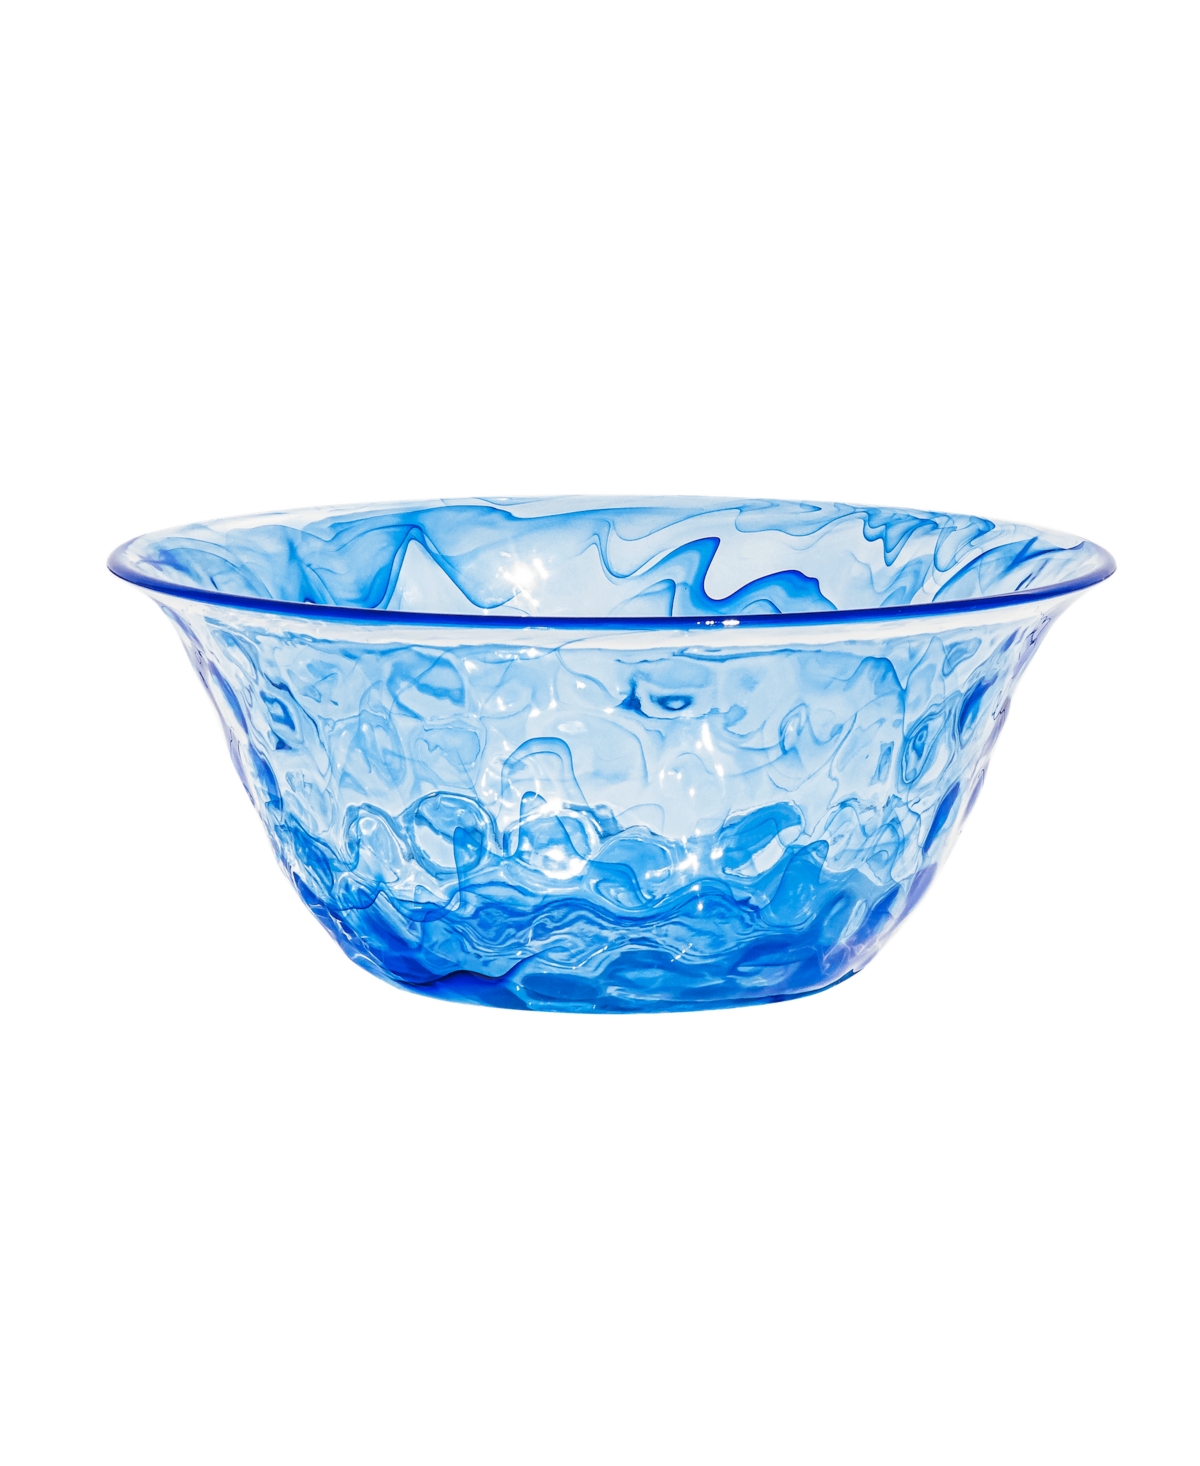 Tarhong Aegean Swirl Serve Bowl In Blue